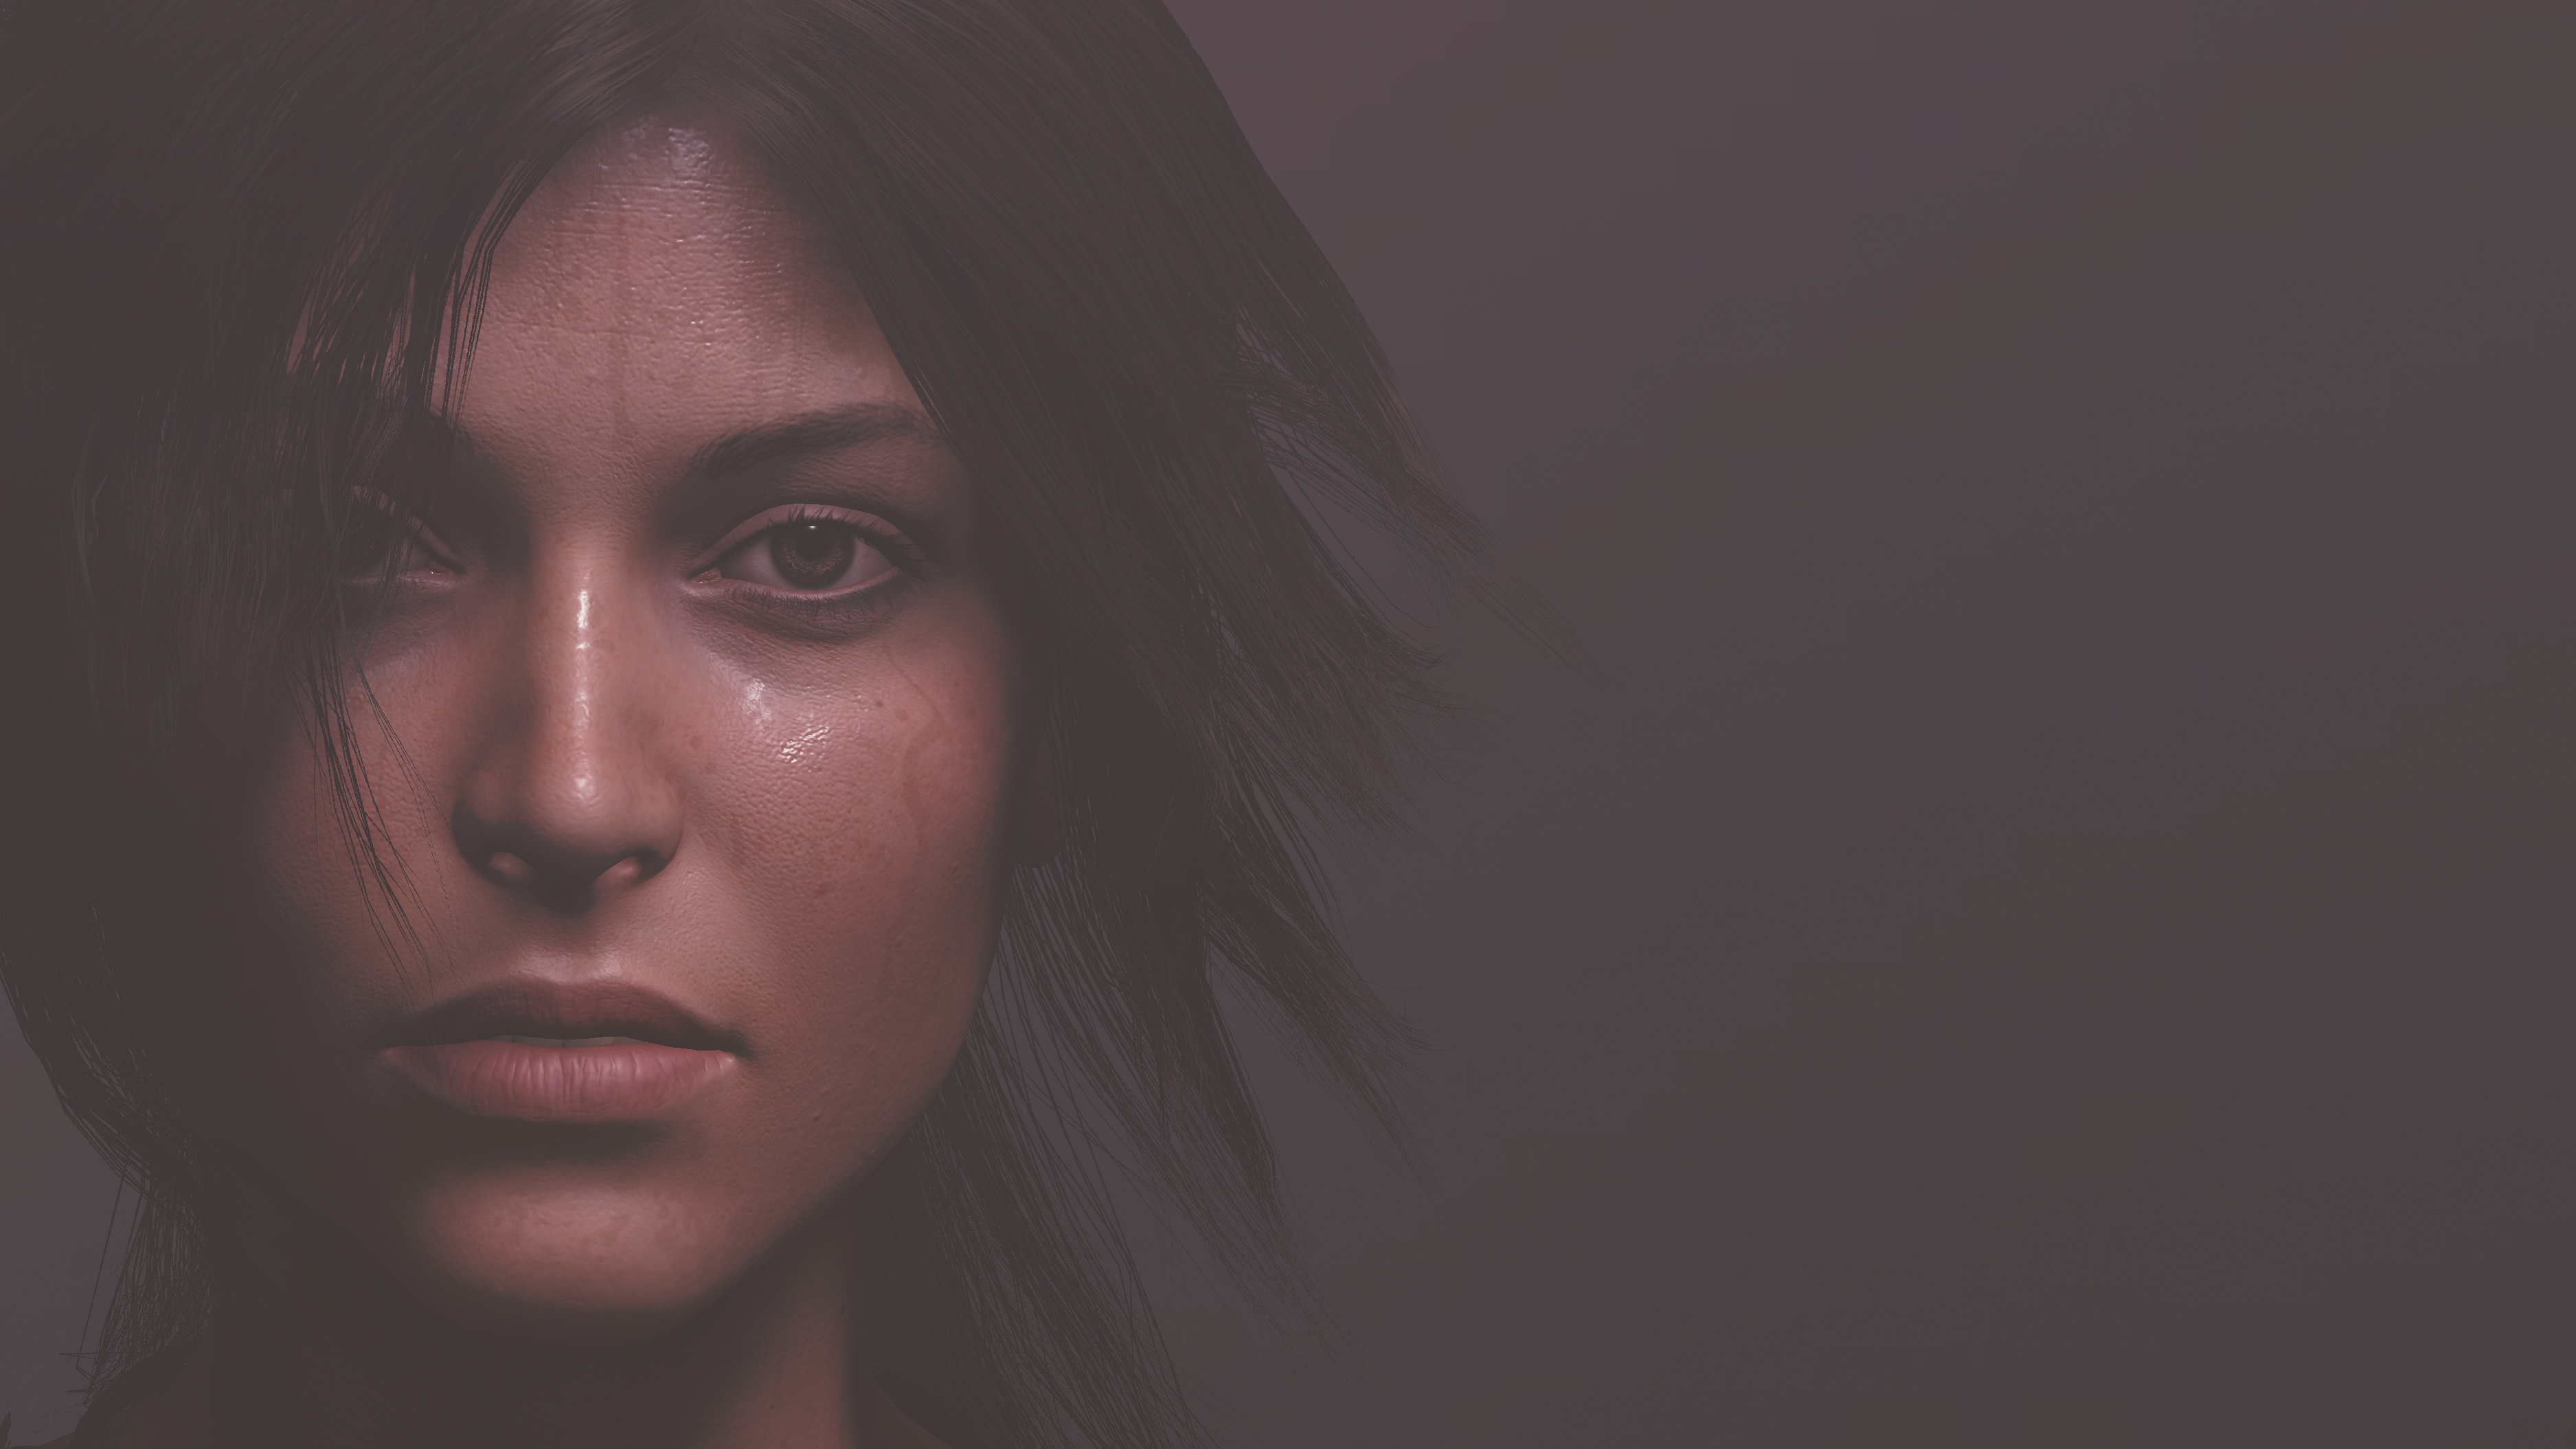 Lara Croft Portrait 4k, HD Games, 4k Wallpapers, Images, Backgrounds ...